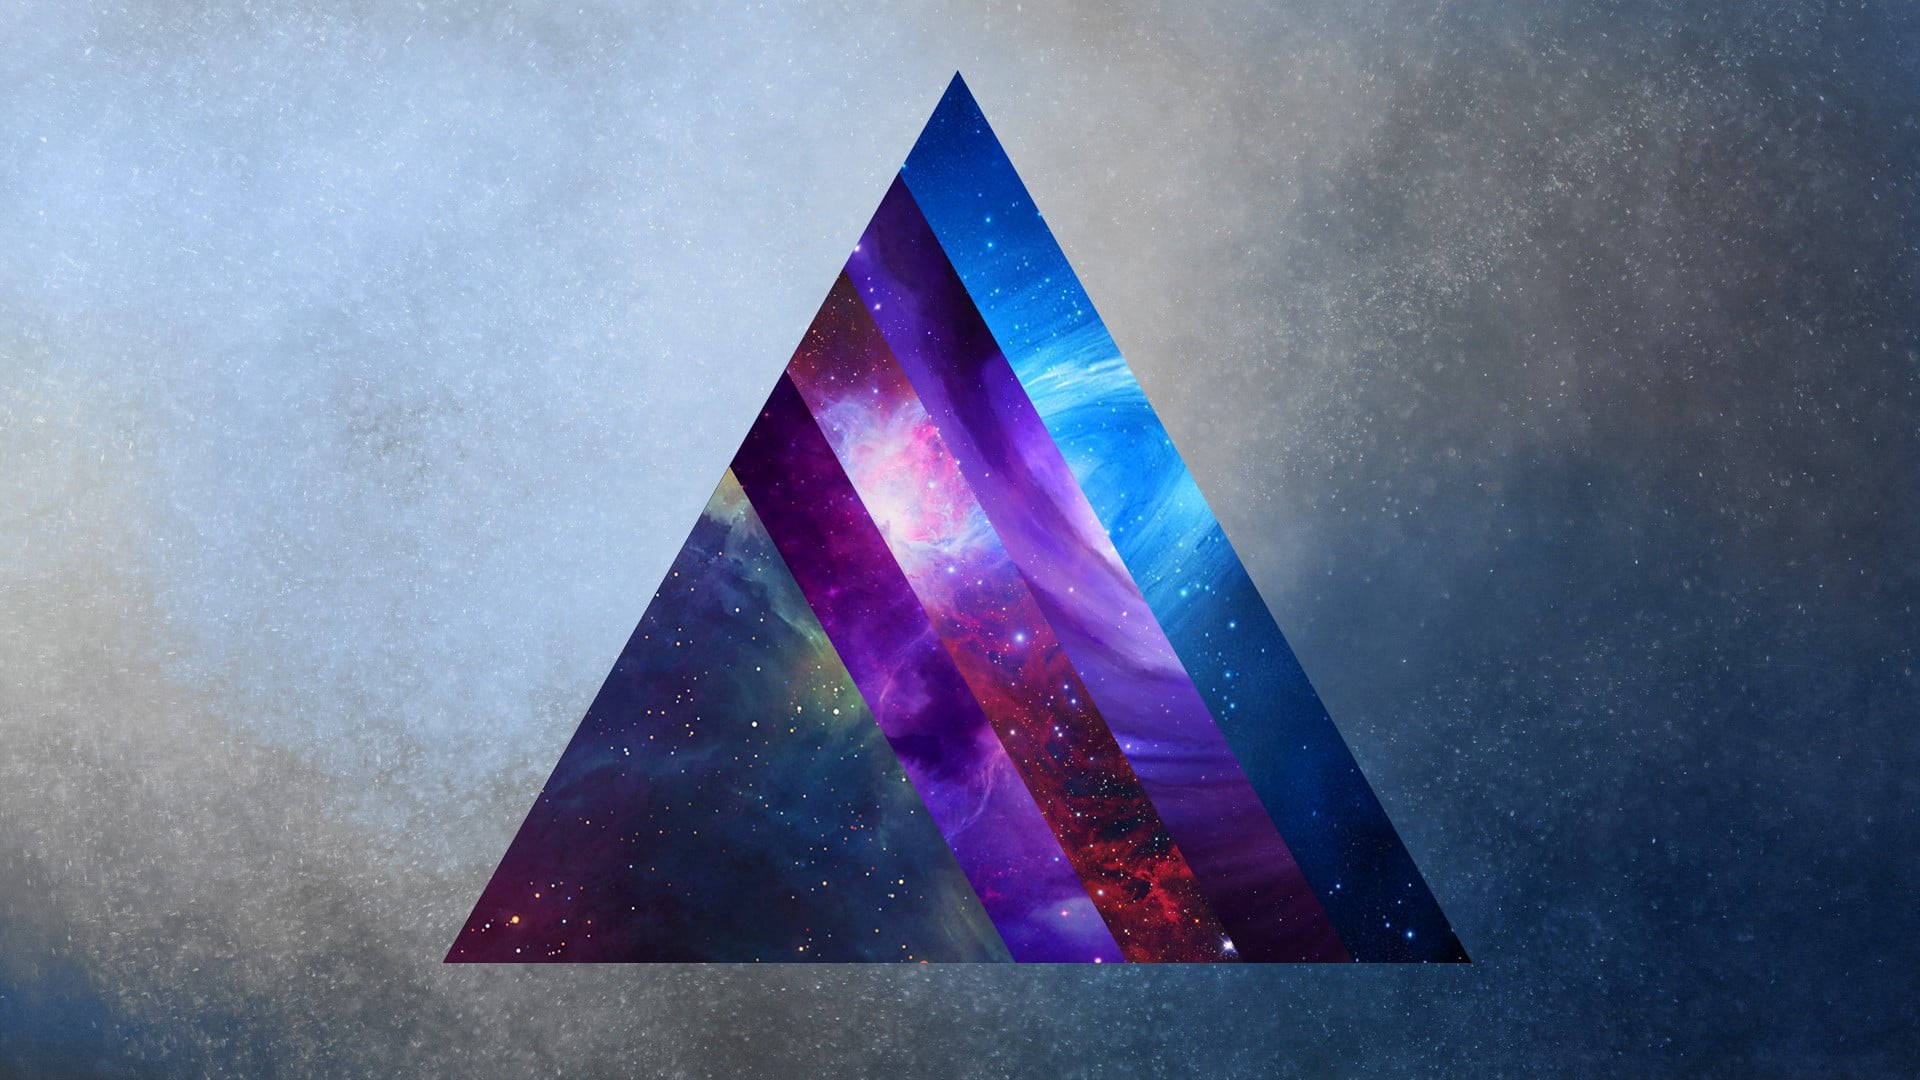 Triangular Prism Galaxy Background